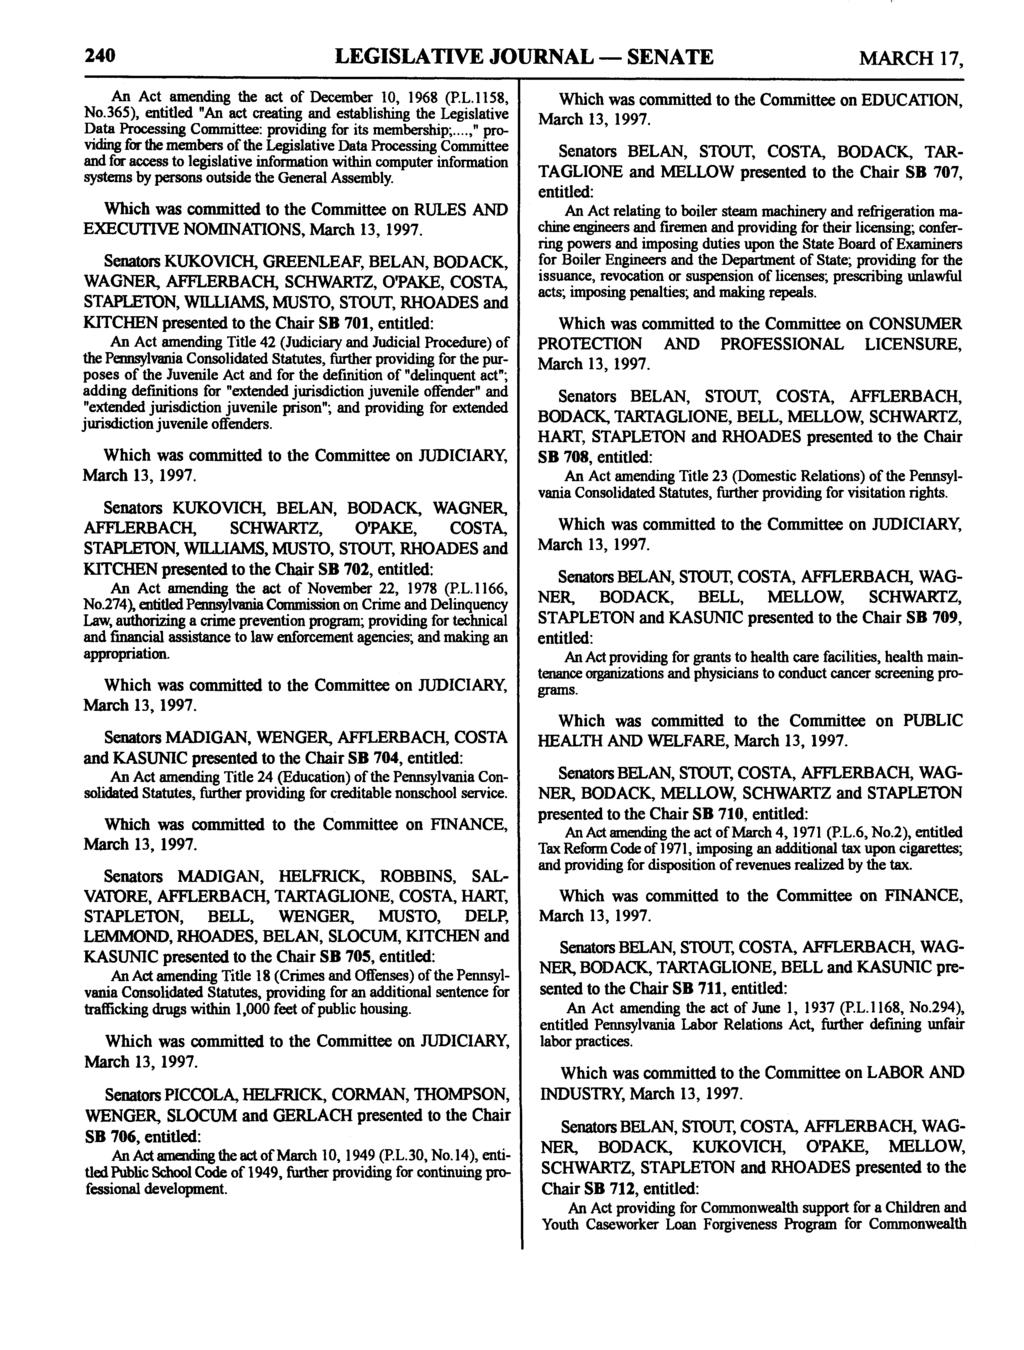 240 LEGISLATIVE JOURNAL - SENATE MARCH 17, An Act amending the act of December 10, 1968 (P.L.1l58, No.